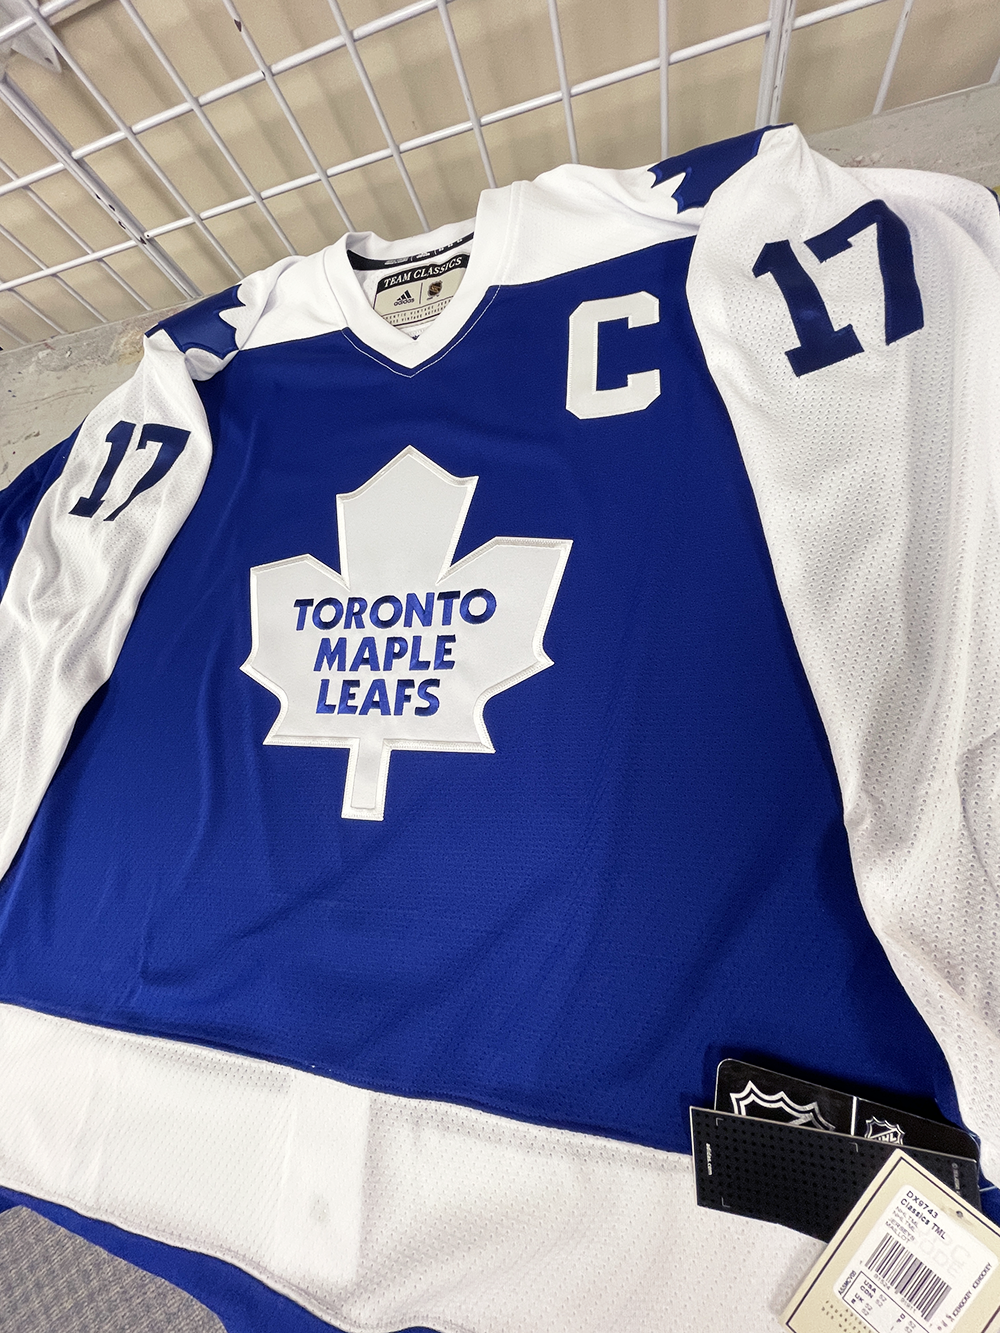 New Small Men's Toronto Maple Leafs Adidas Jersey